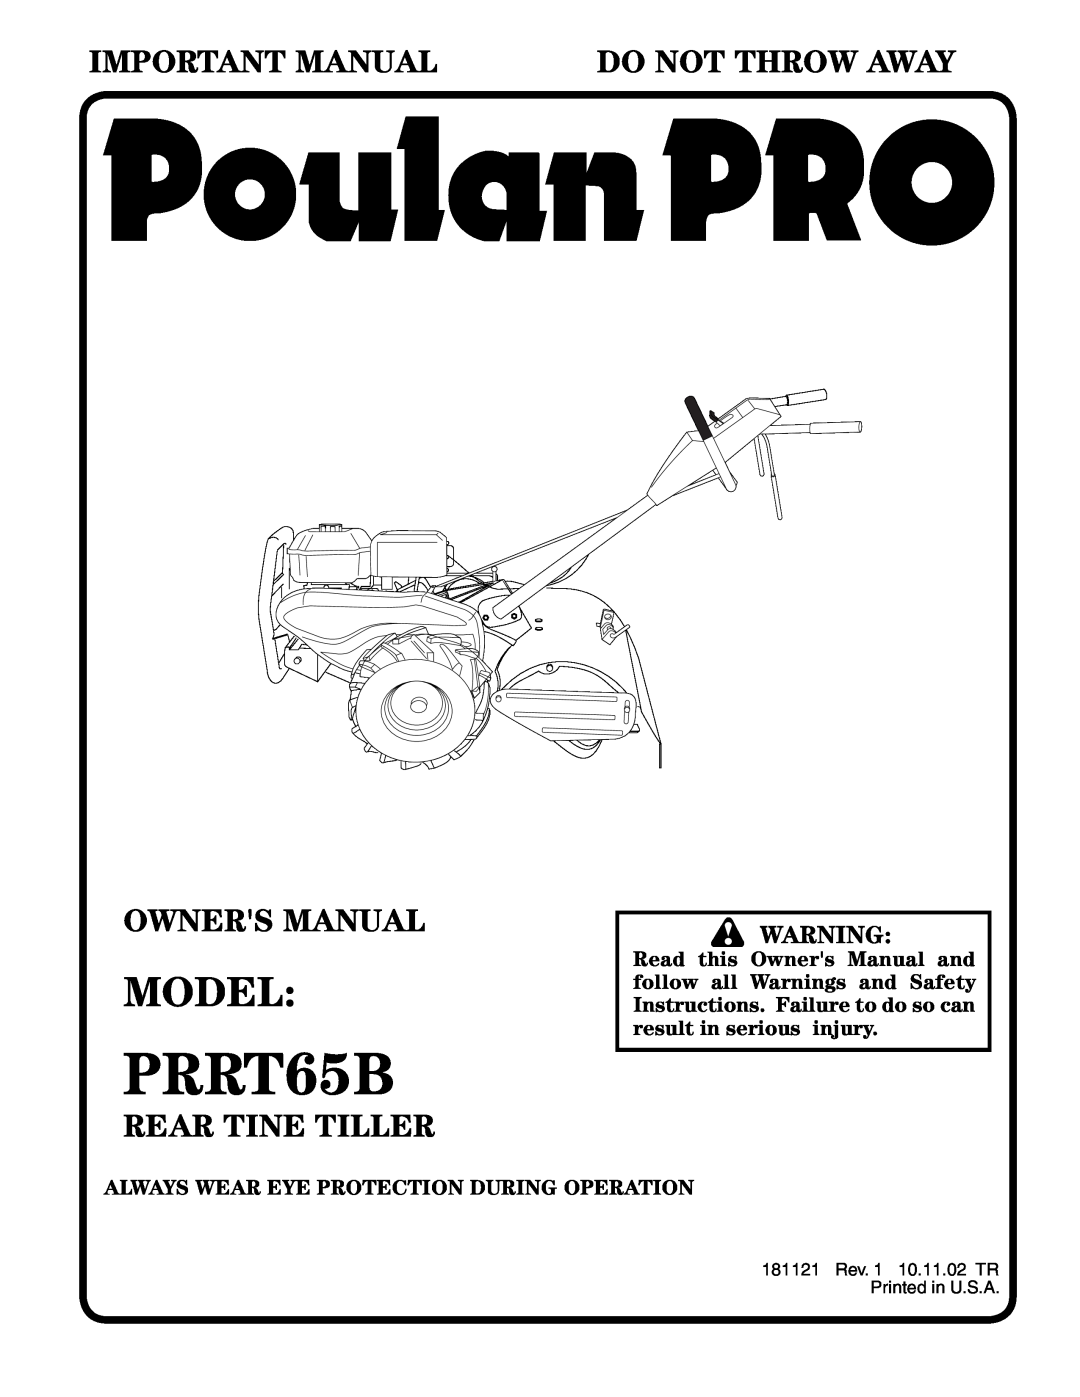 Poulan PRRT65B owner manual Model, Important Manual, Rear Tine Tiller, Do Not Throw Away 